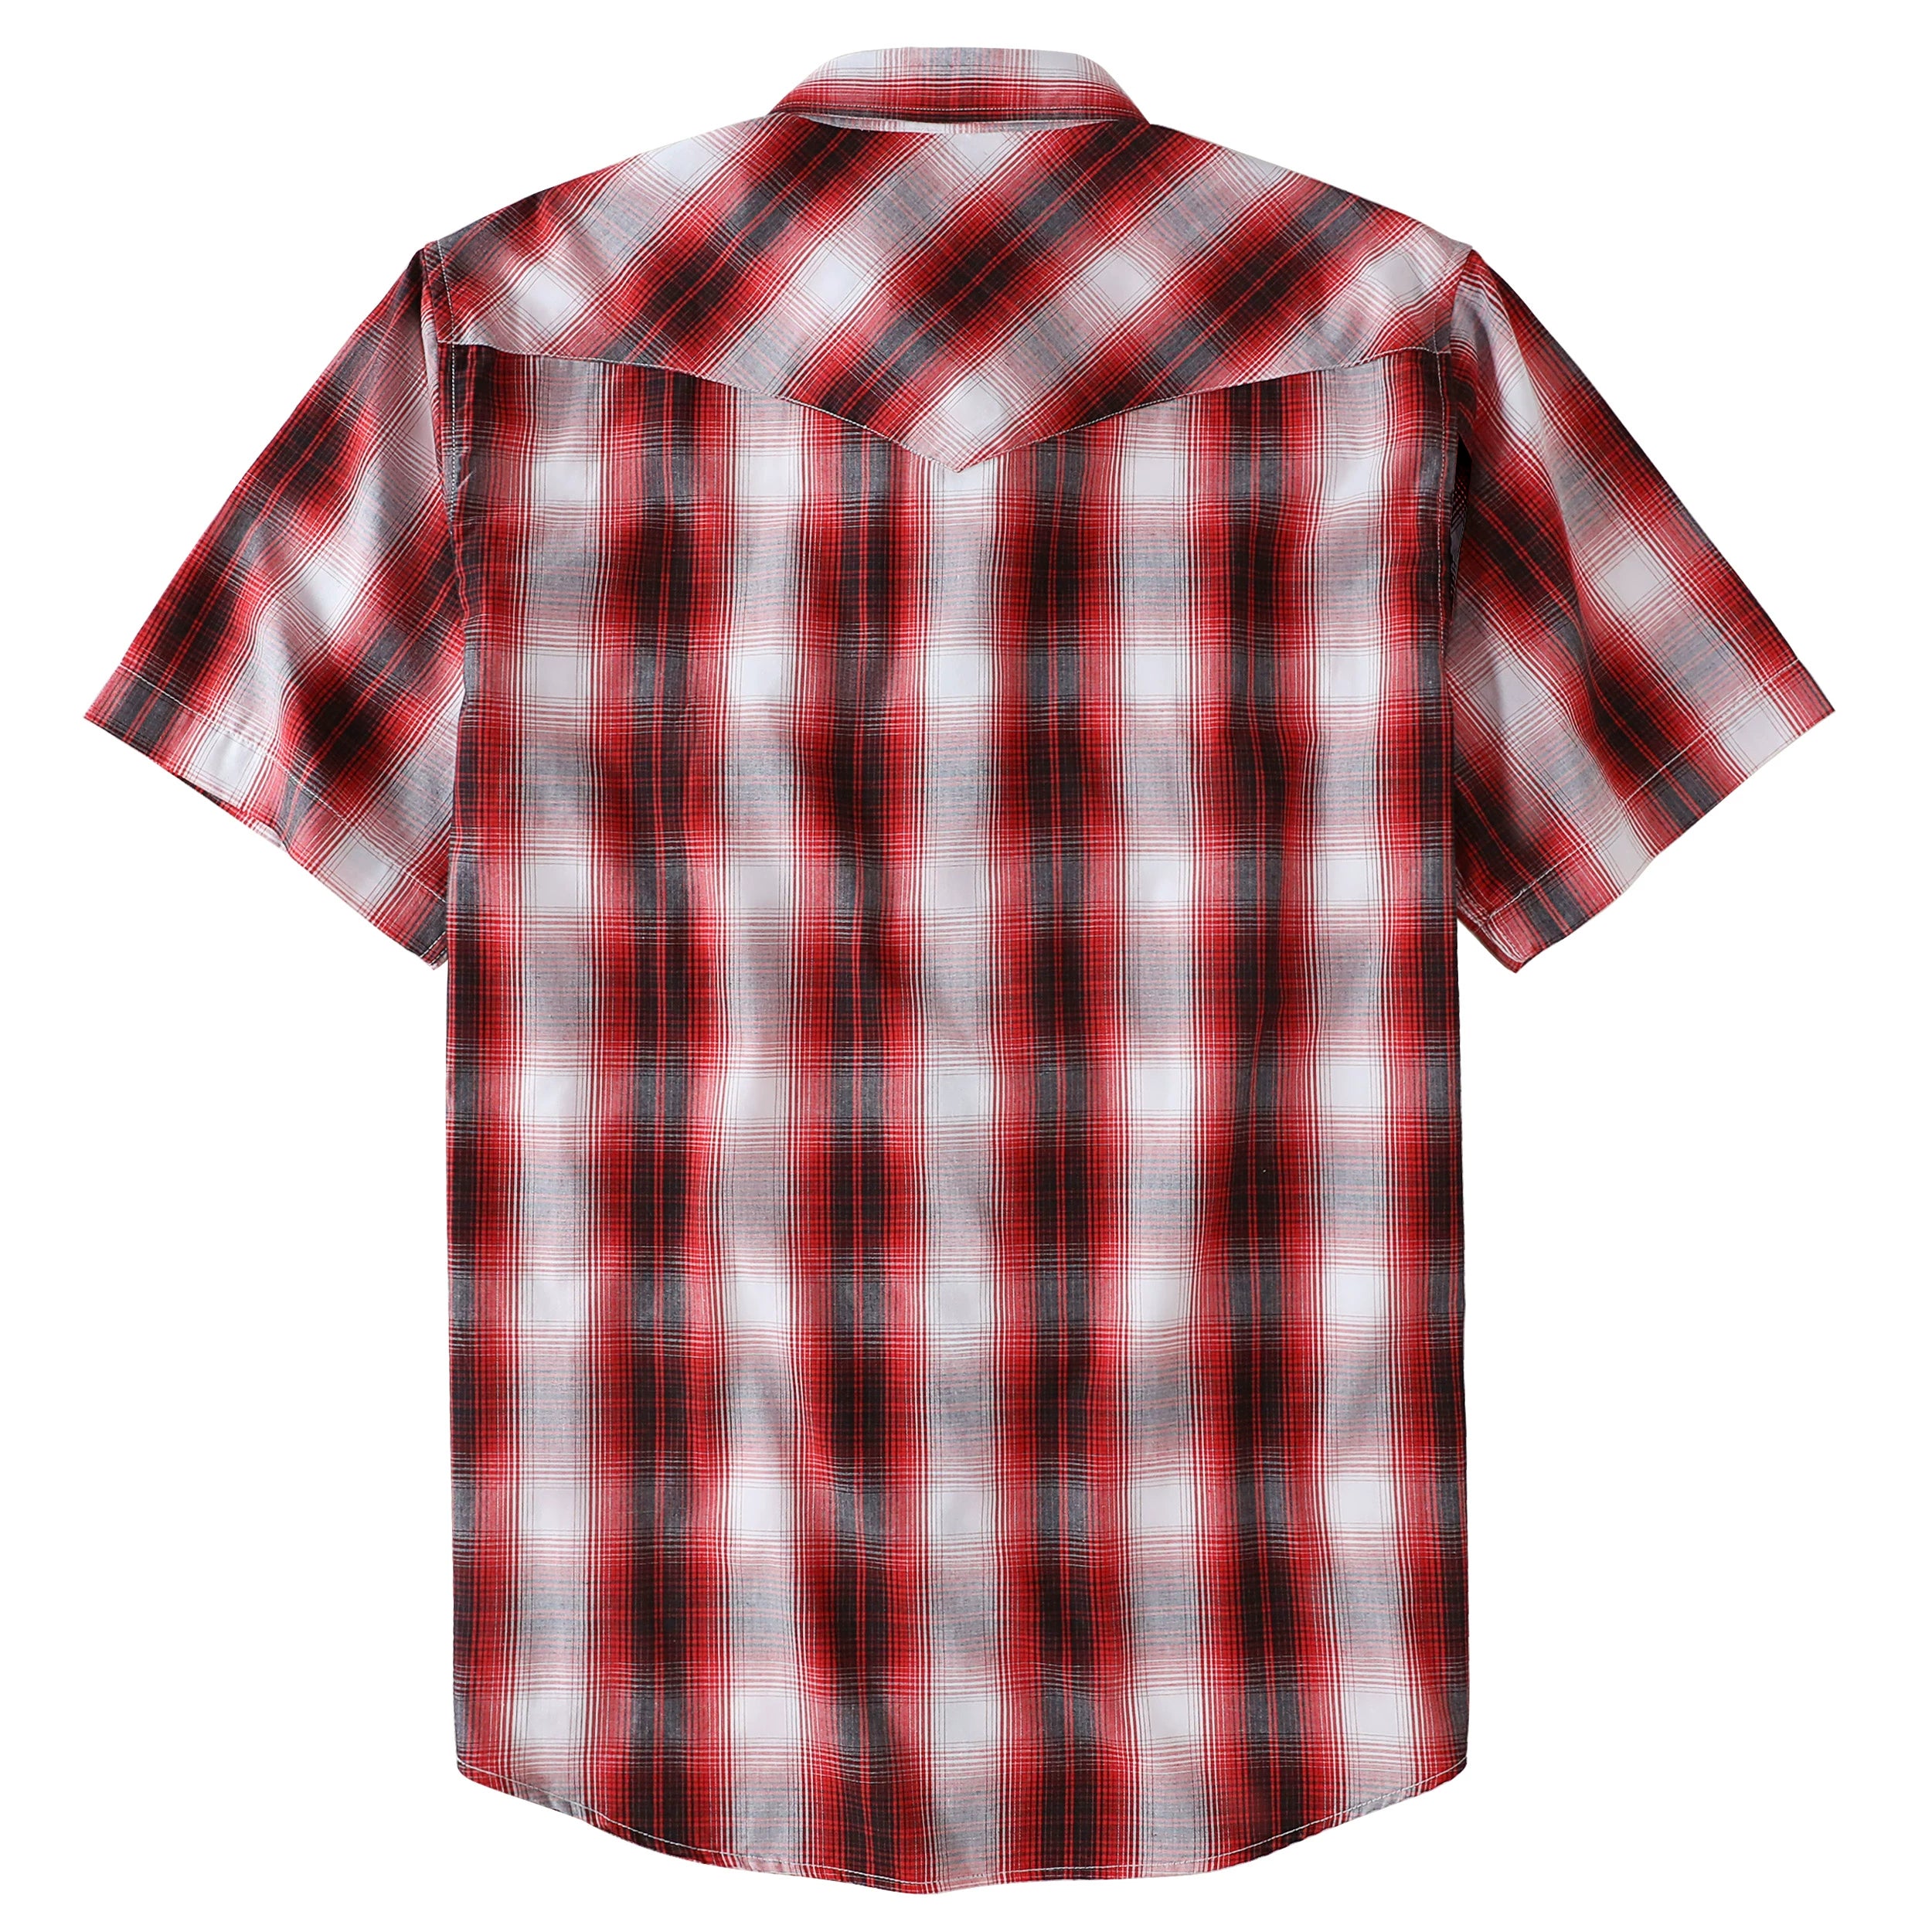 Dubinik® Western Shirts for Men Short Sleeve Plaid Pearl Snap Shirts for Men Button Up Shirt Cowboy Casual Work Shirt#41028